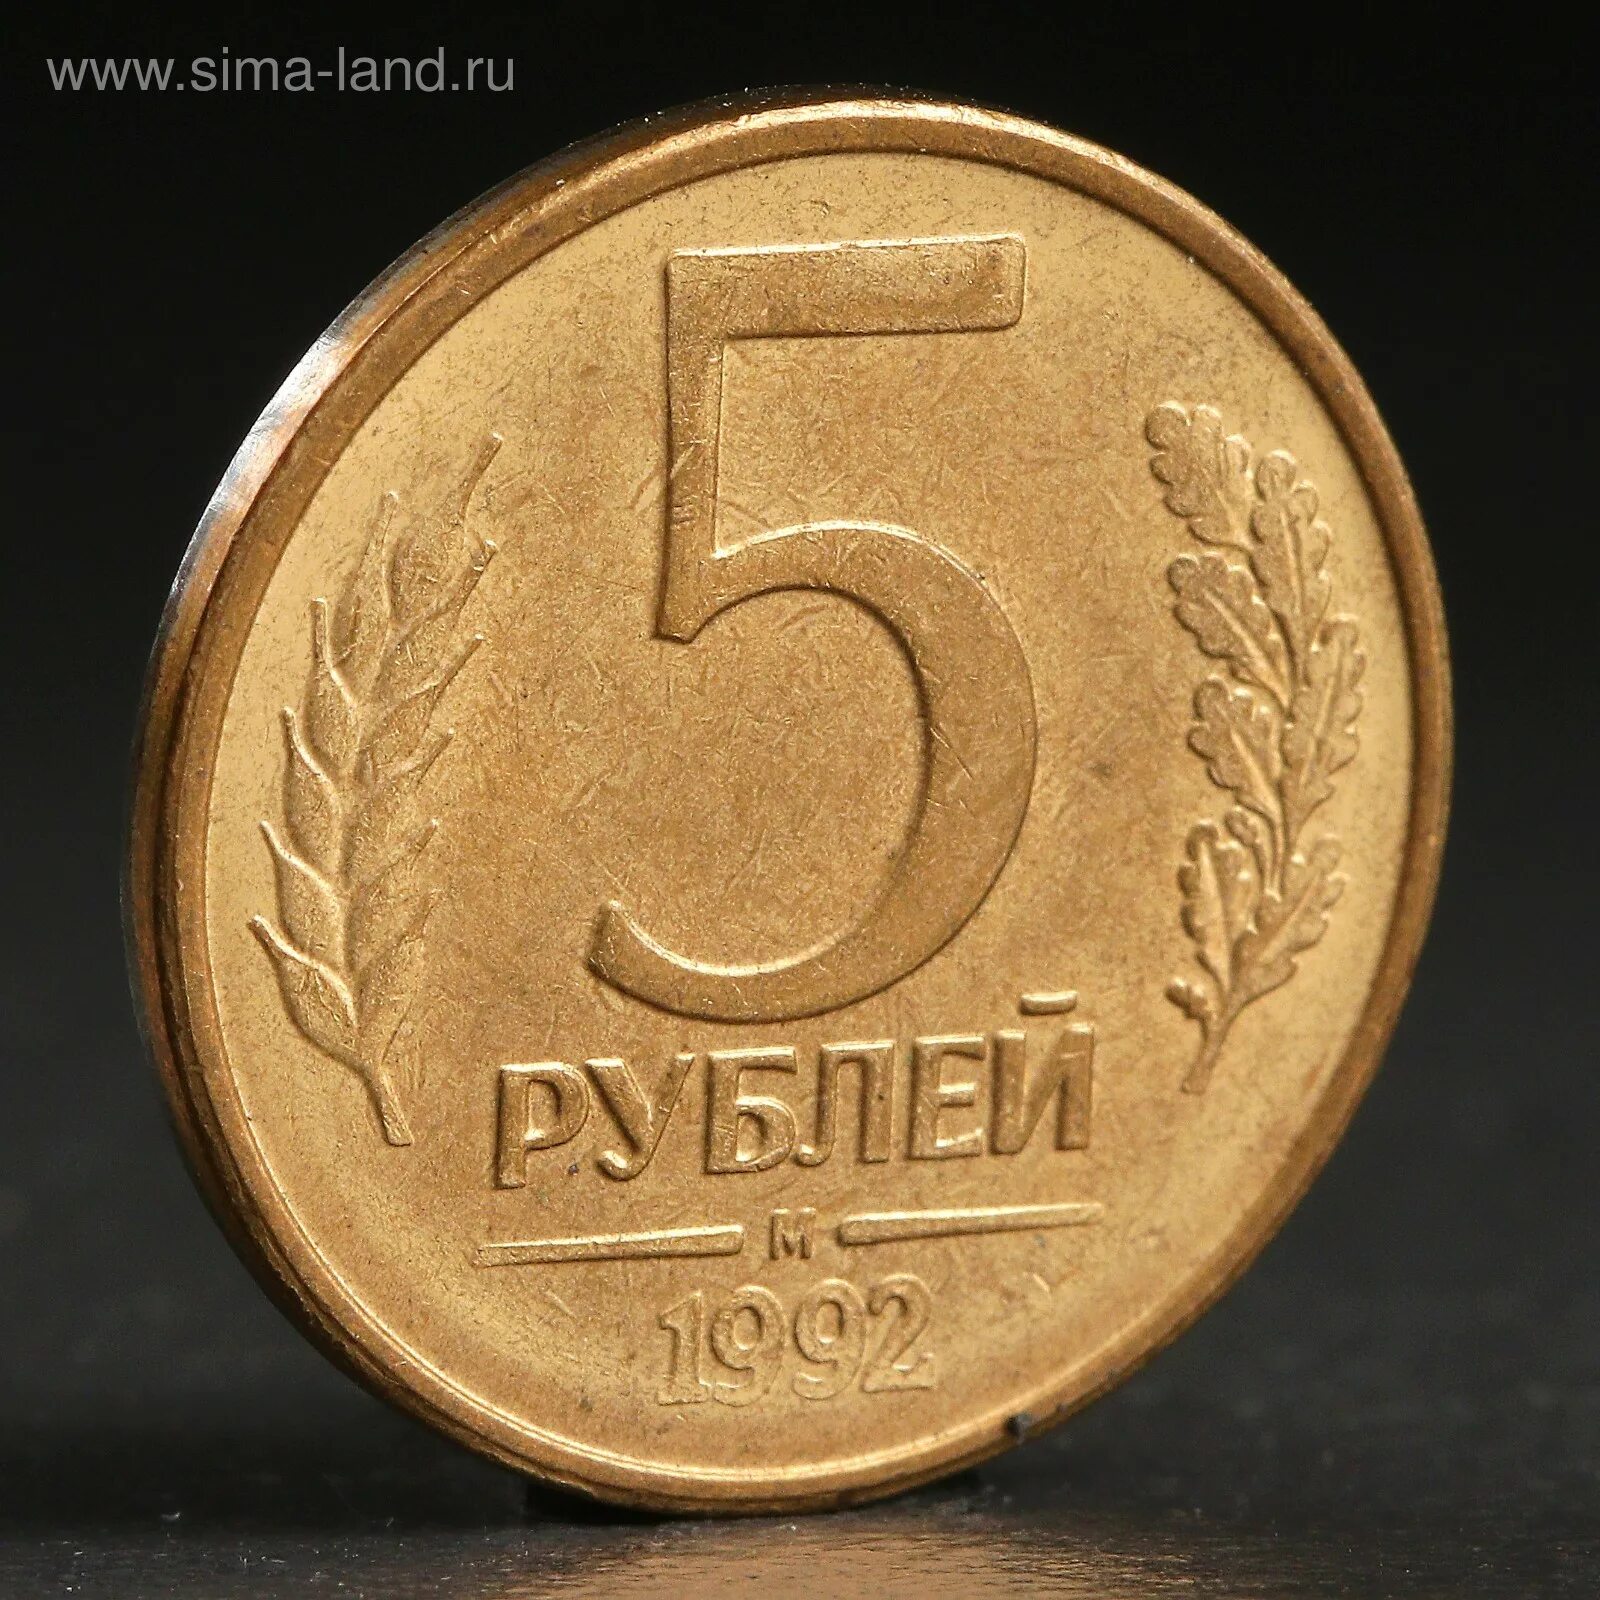 Монета 5 рублей года 1992 м. Монета 5 рублей 1992 л. Монета 5 рублей 1992. Российская монета 5 рублей.